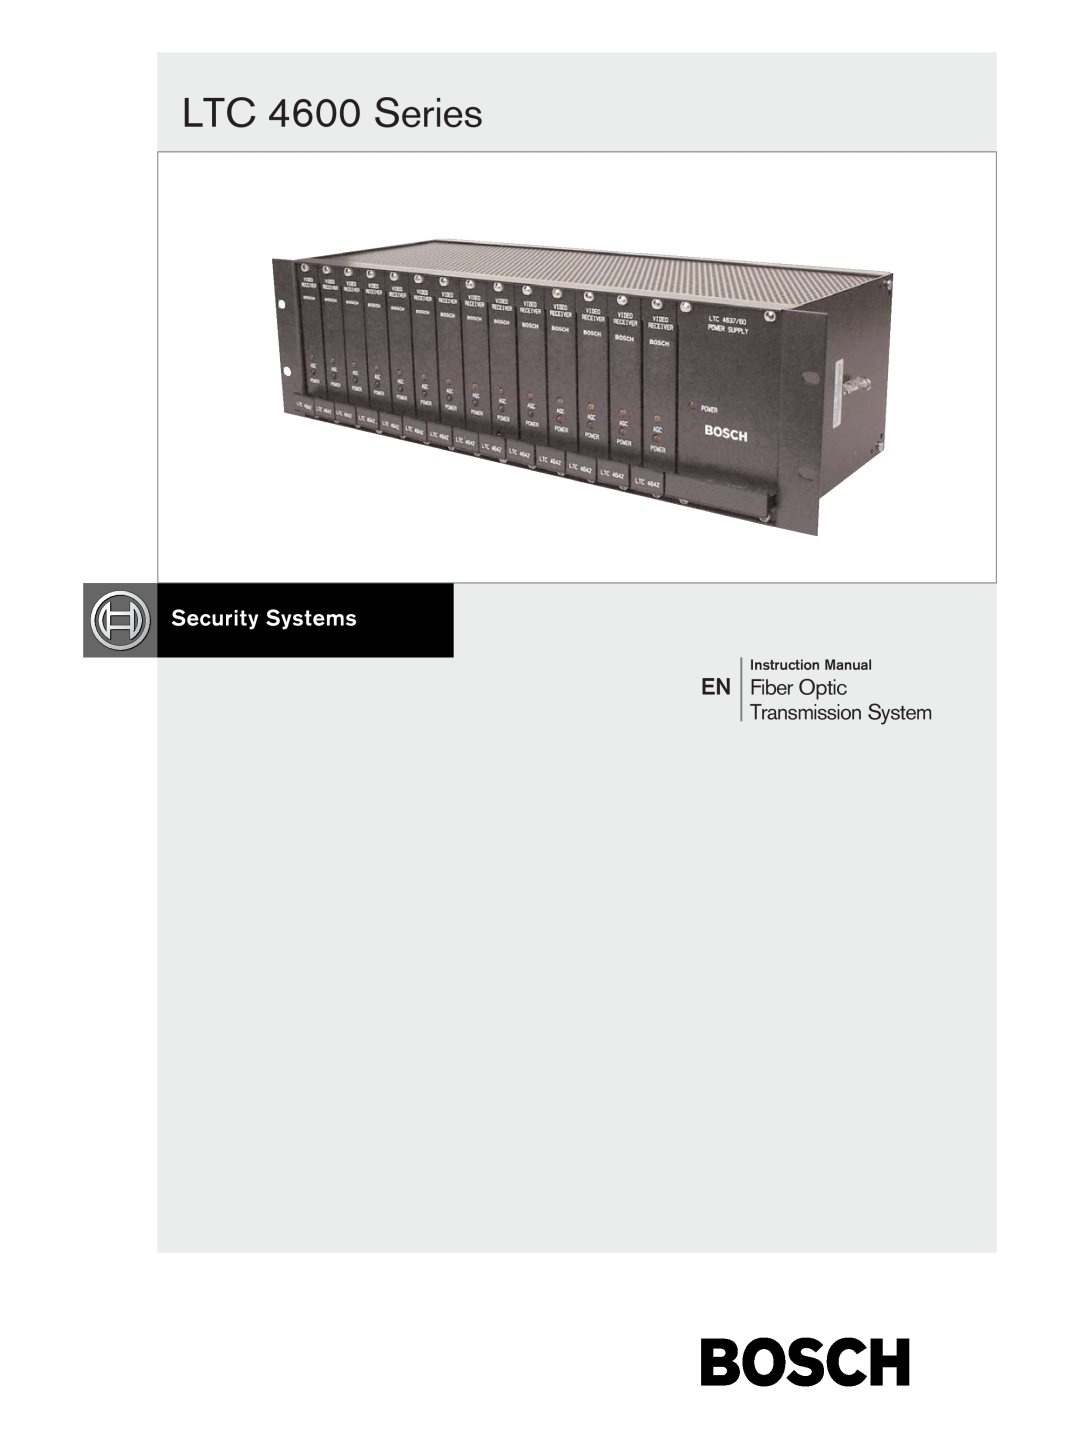 Bosch Appliances instruction manual LTC 4600 Series, Fiber Optic Transmission System 